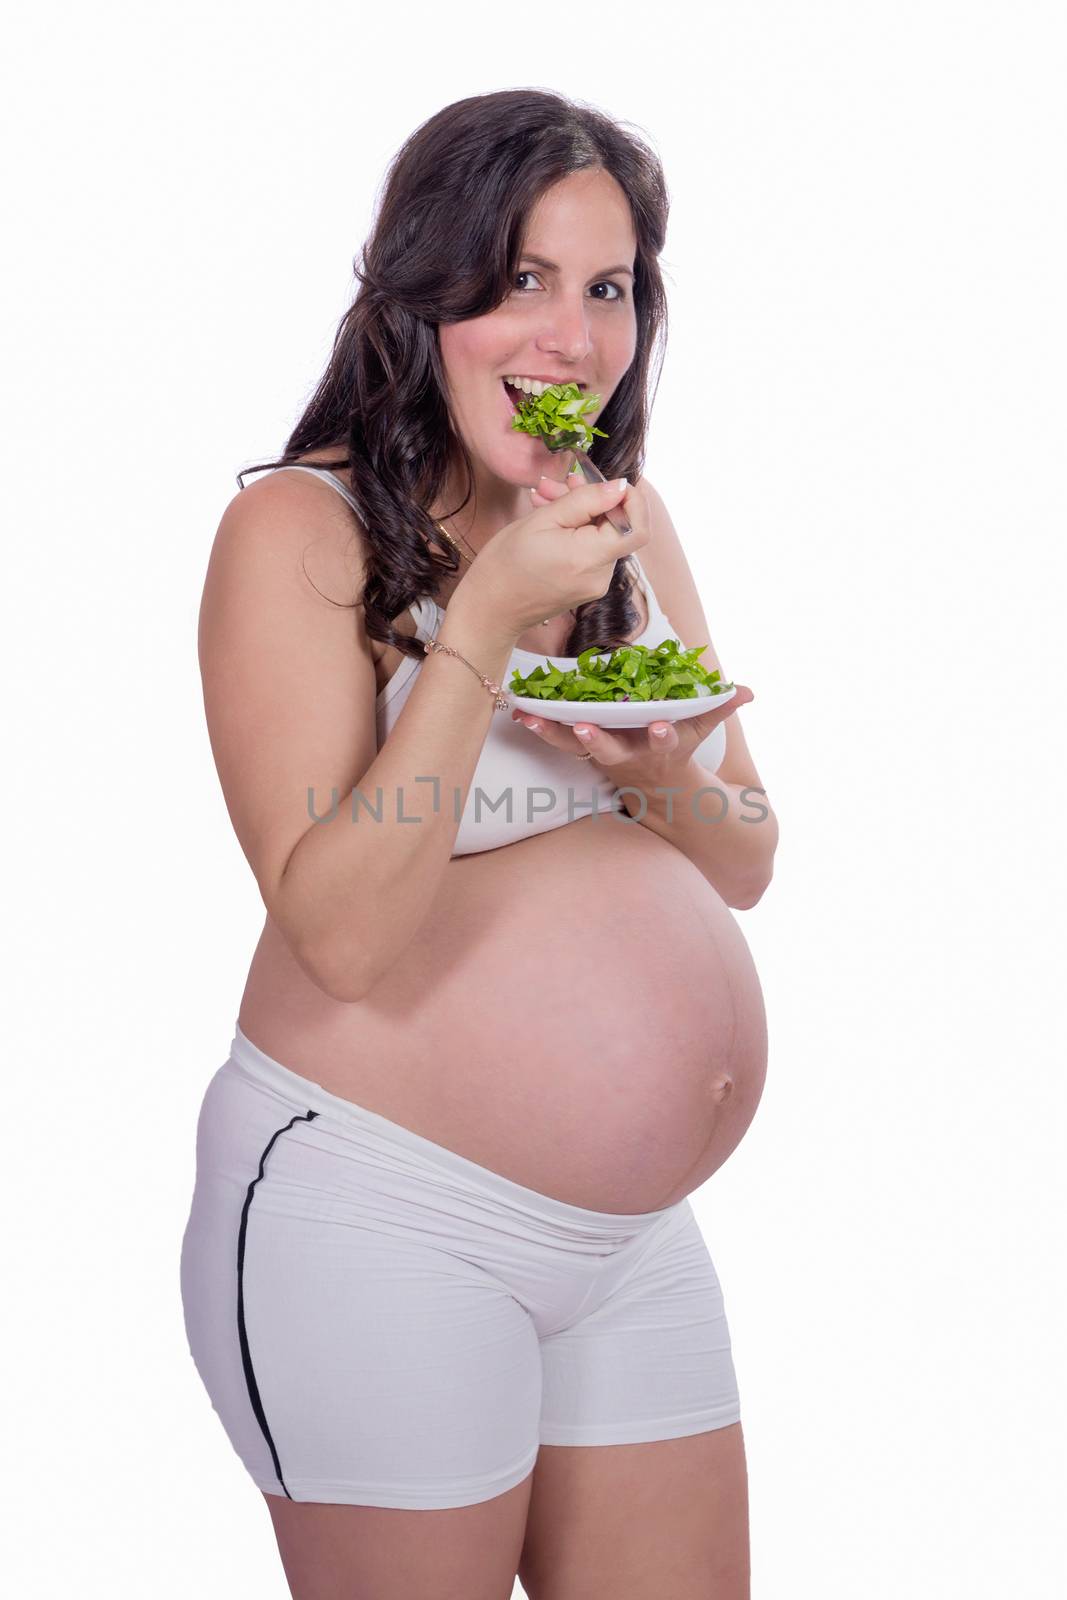 A pregnant woman eating salad by jrivalta